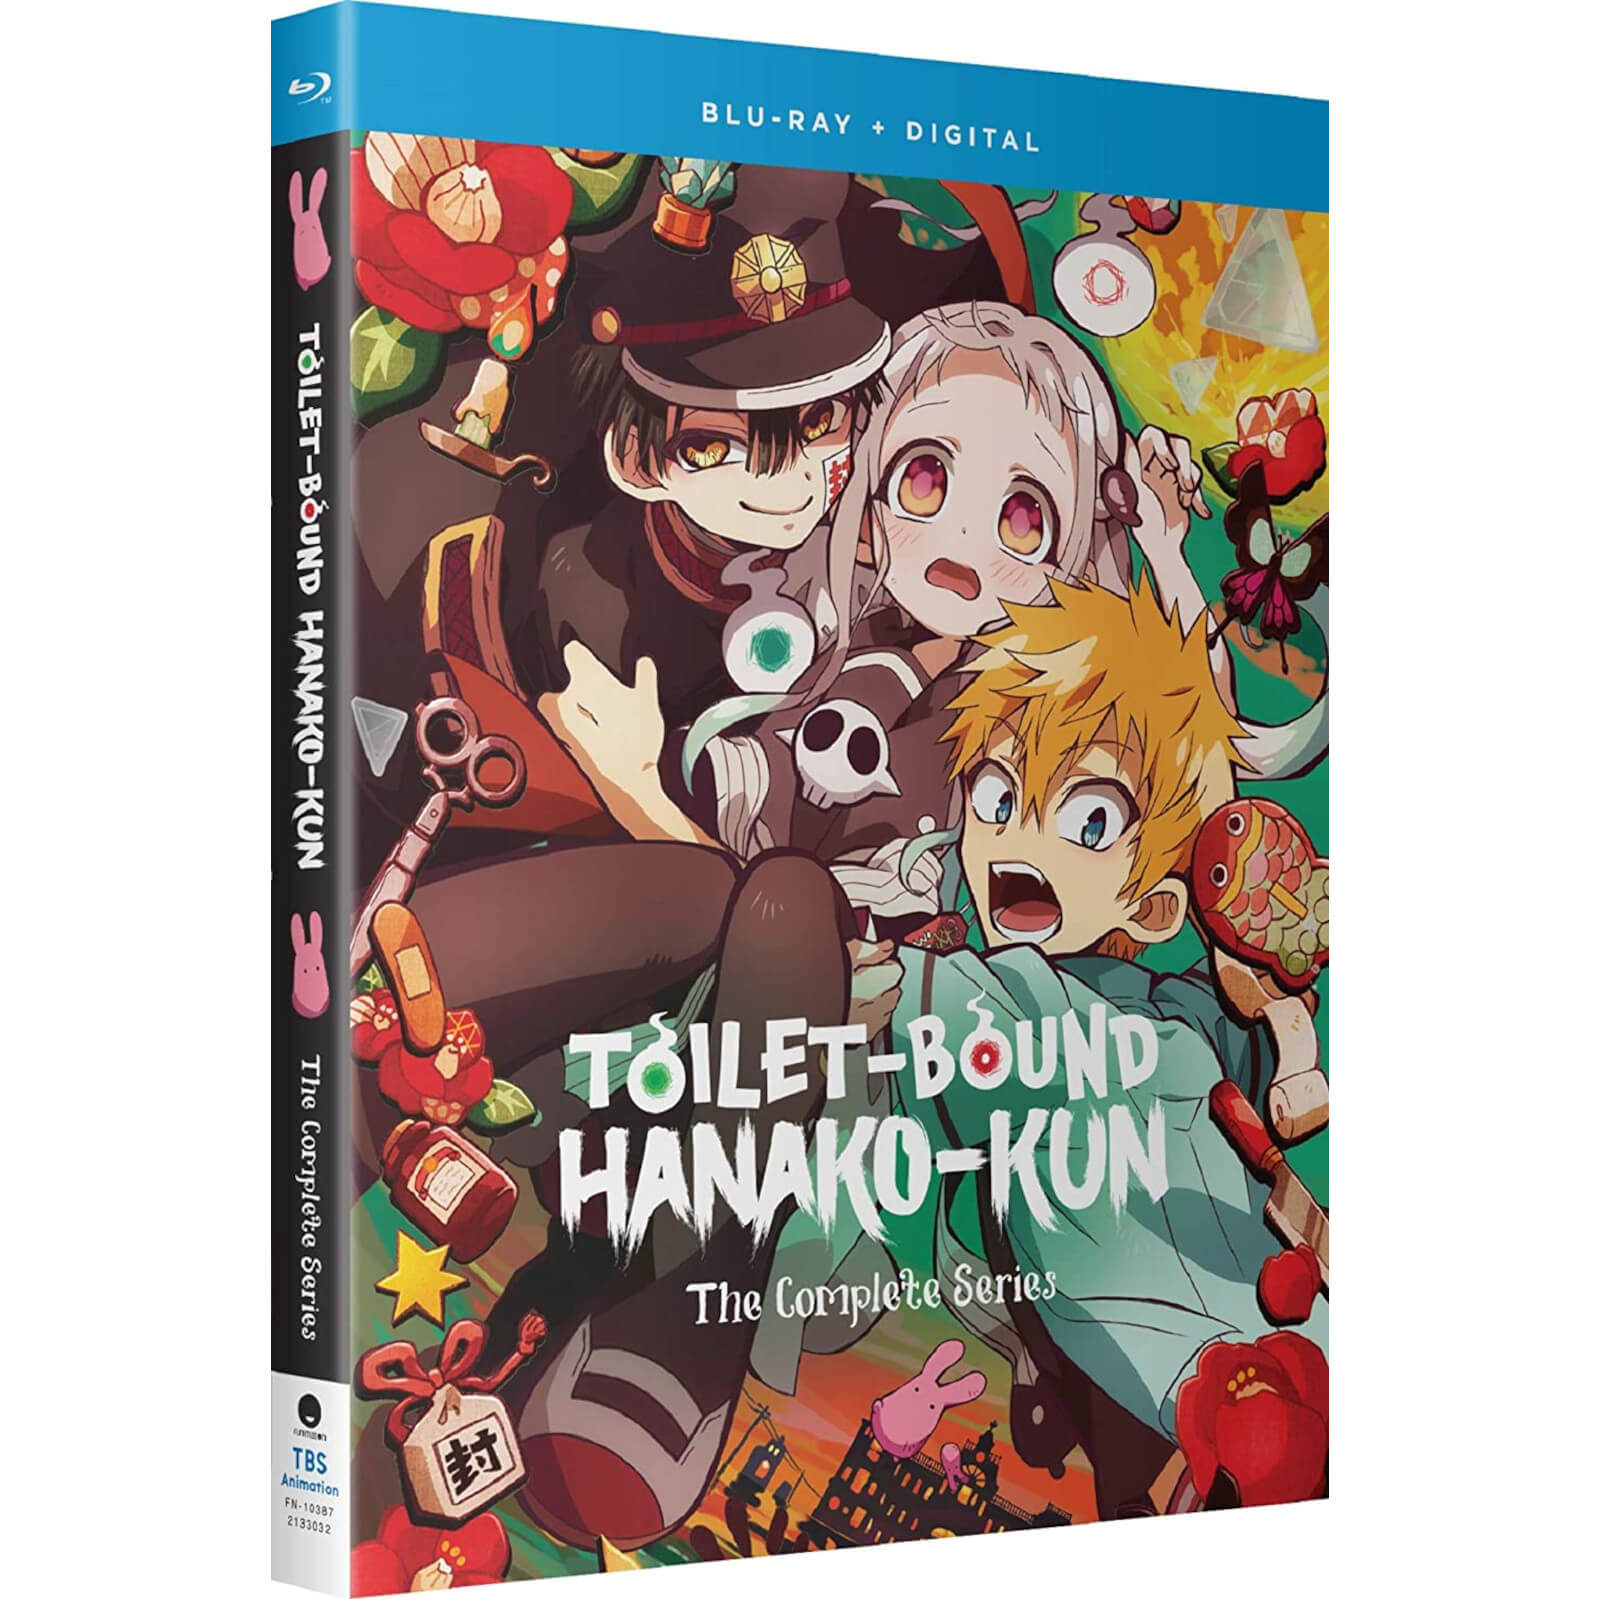 Toilet-bound Hanako-kun - The Complete Series (Includes Digital Copy) von Funimation